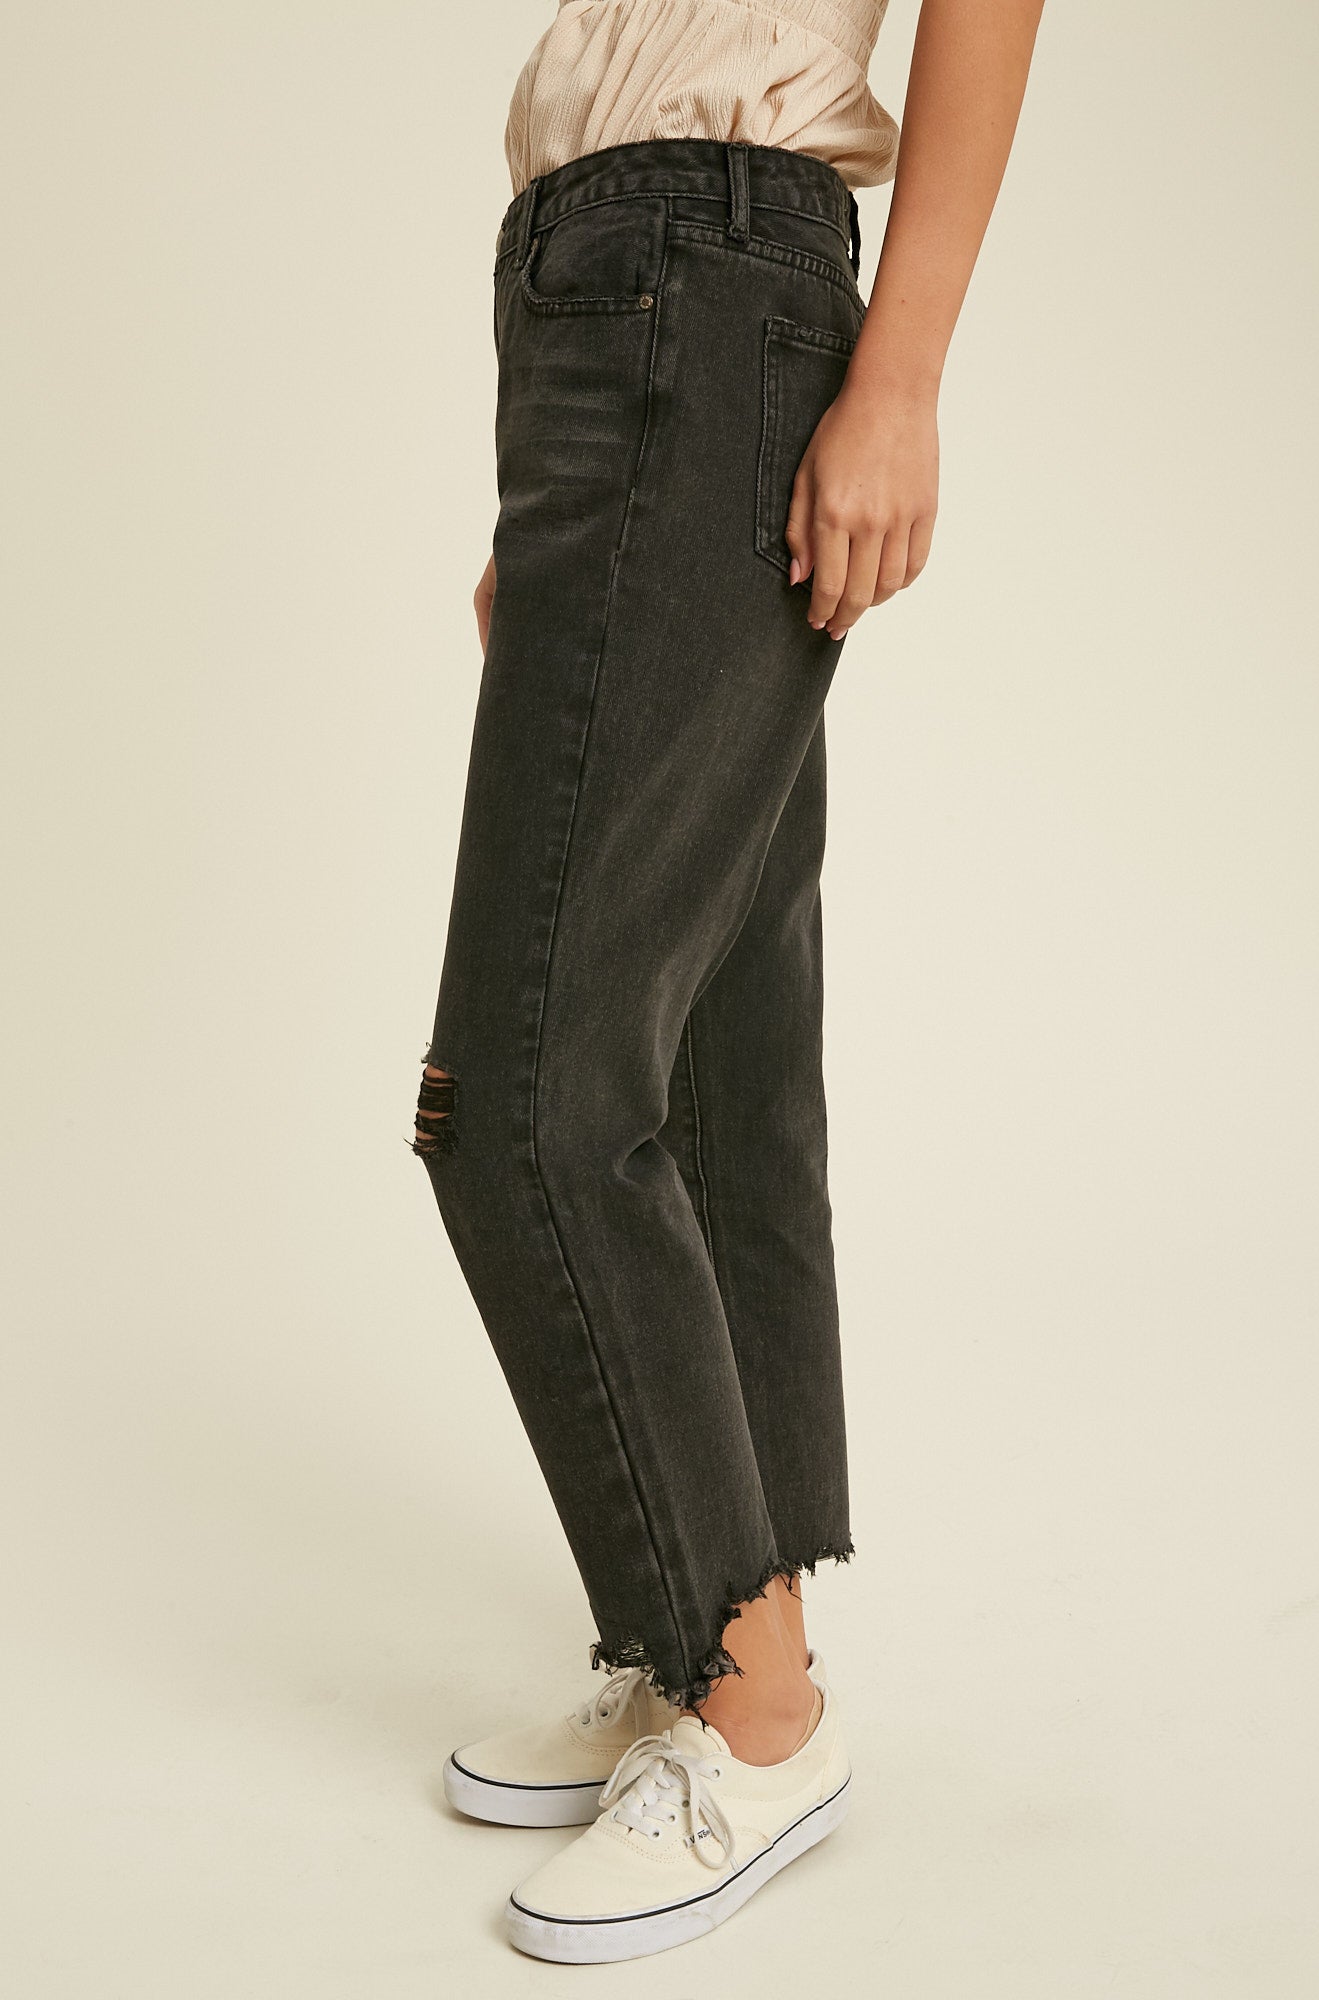 Aria - Distressed Jeans, Black